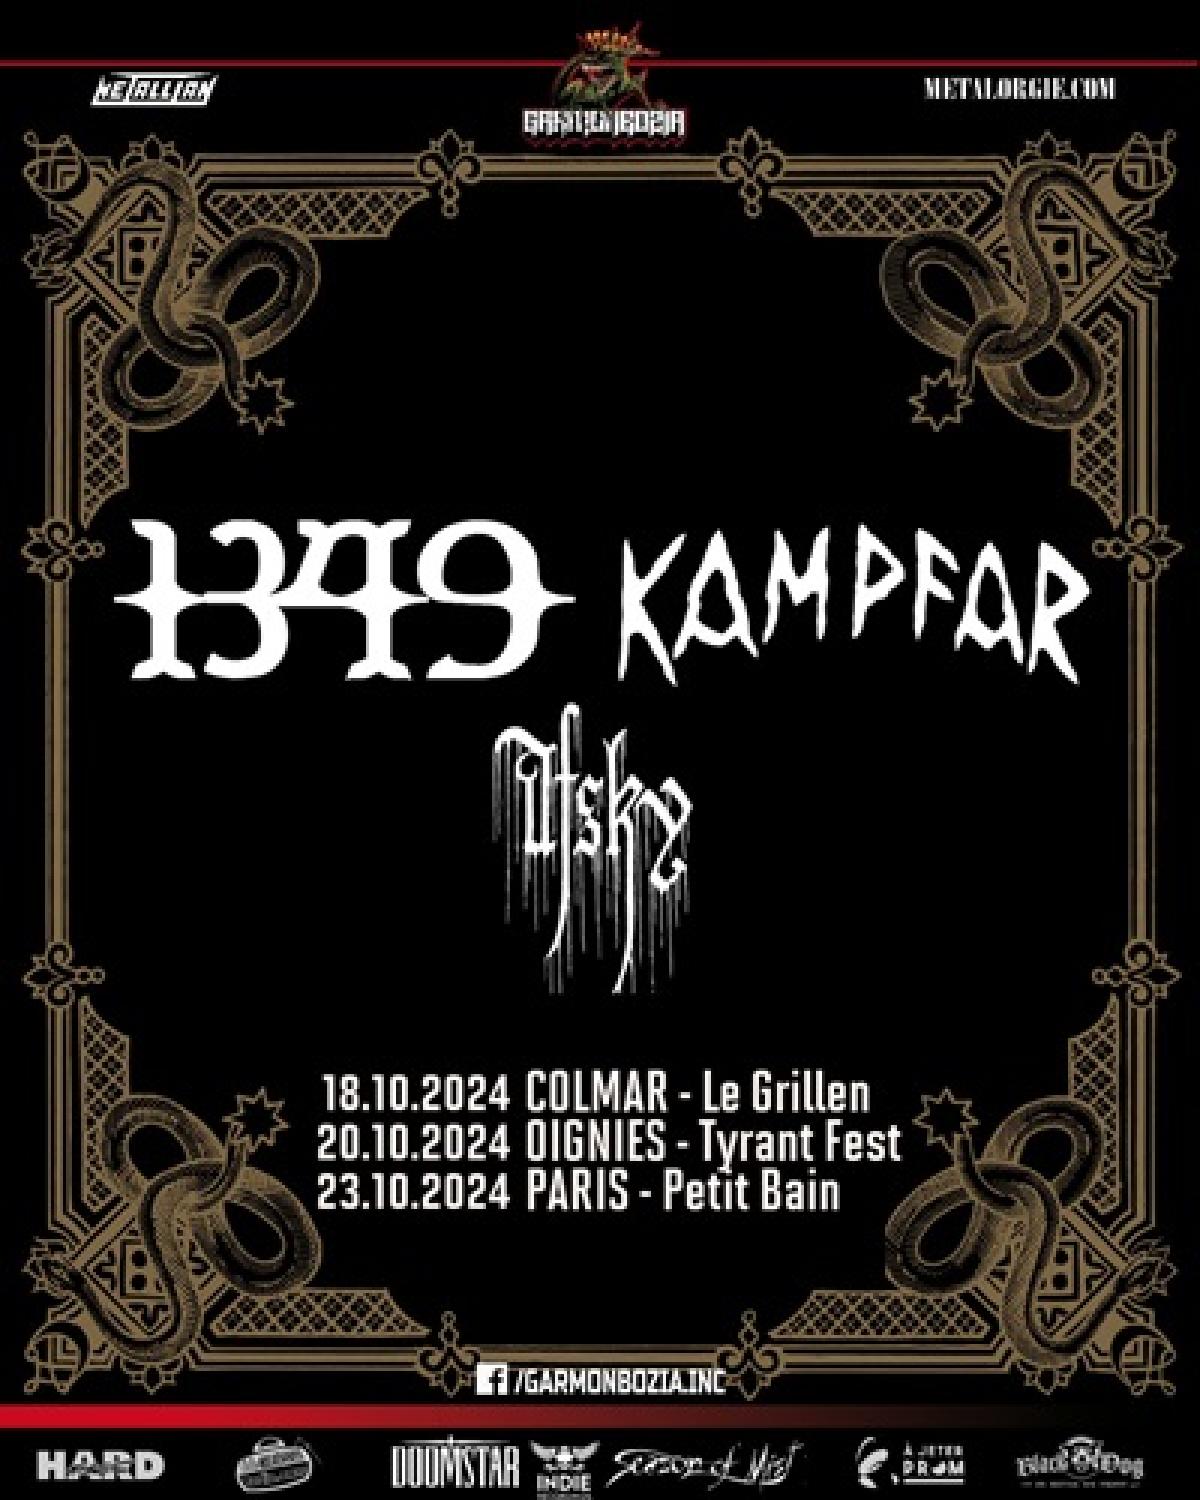 Billets 1349 - Kampfar - Afsky (Petit Bain - Paris)